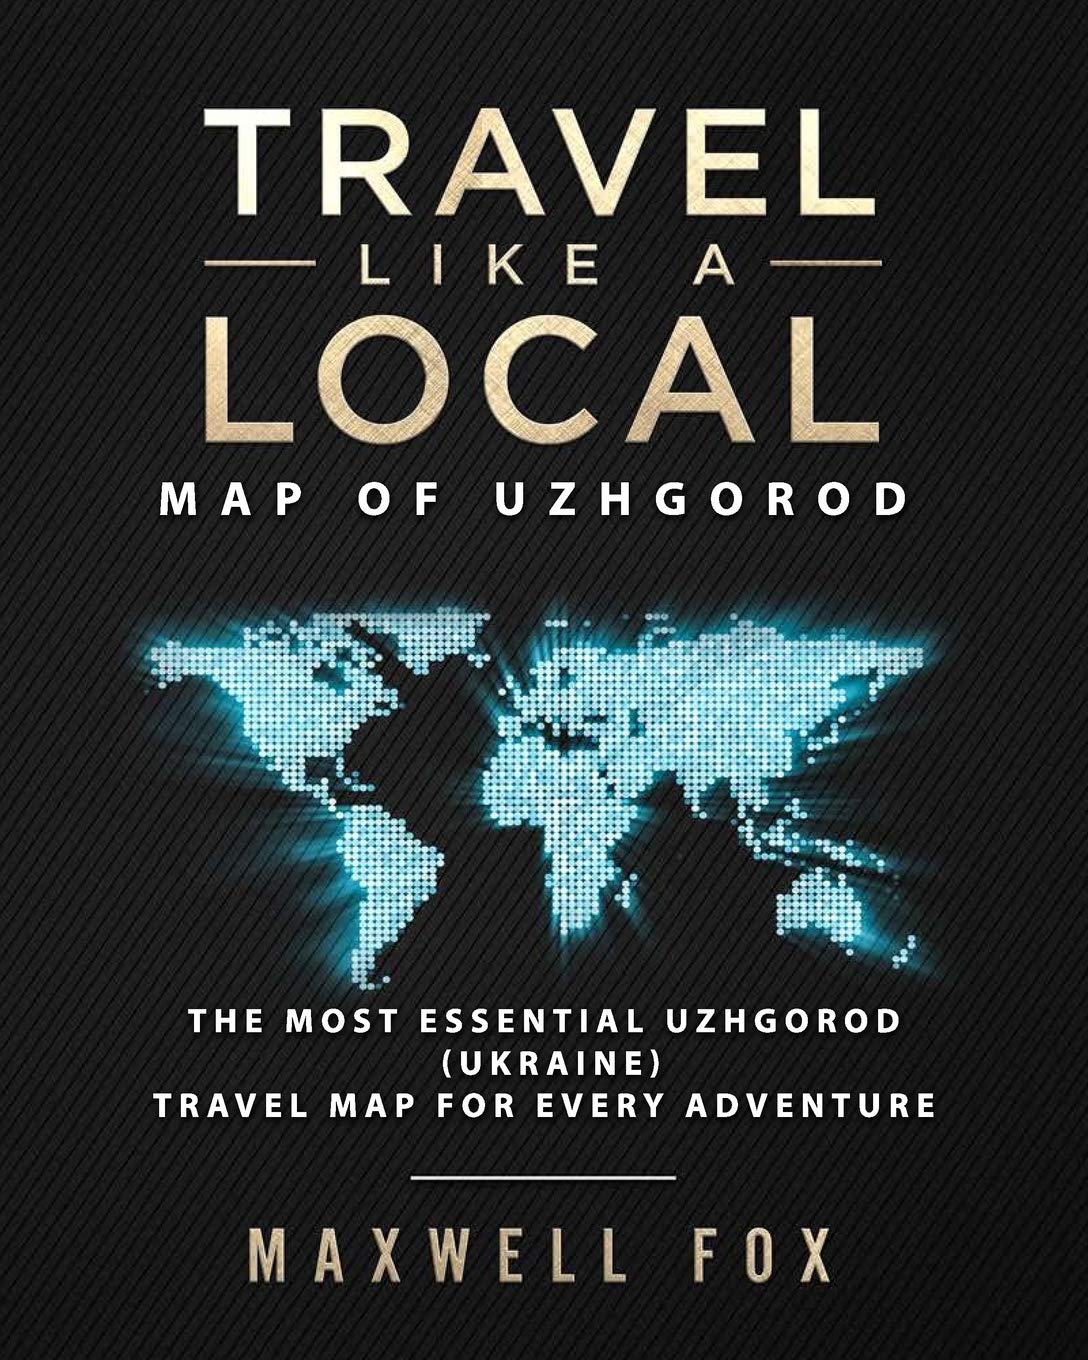 Travel Like a Local - Map of Uzhgorod: The Most Essential Uzhgorod (Ukraine) Travel Map for Every Adventure